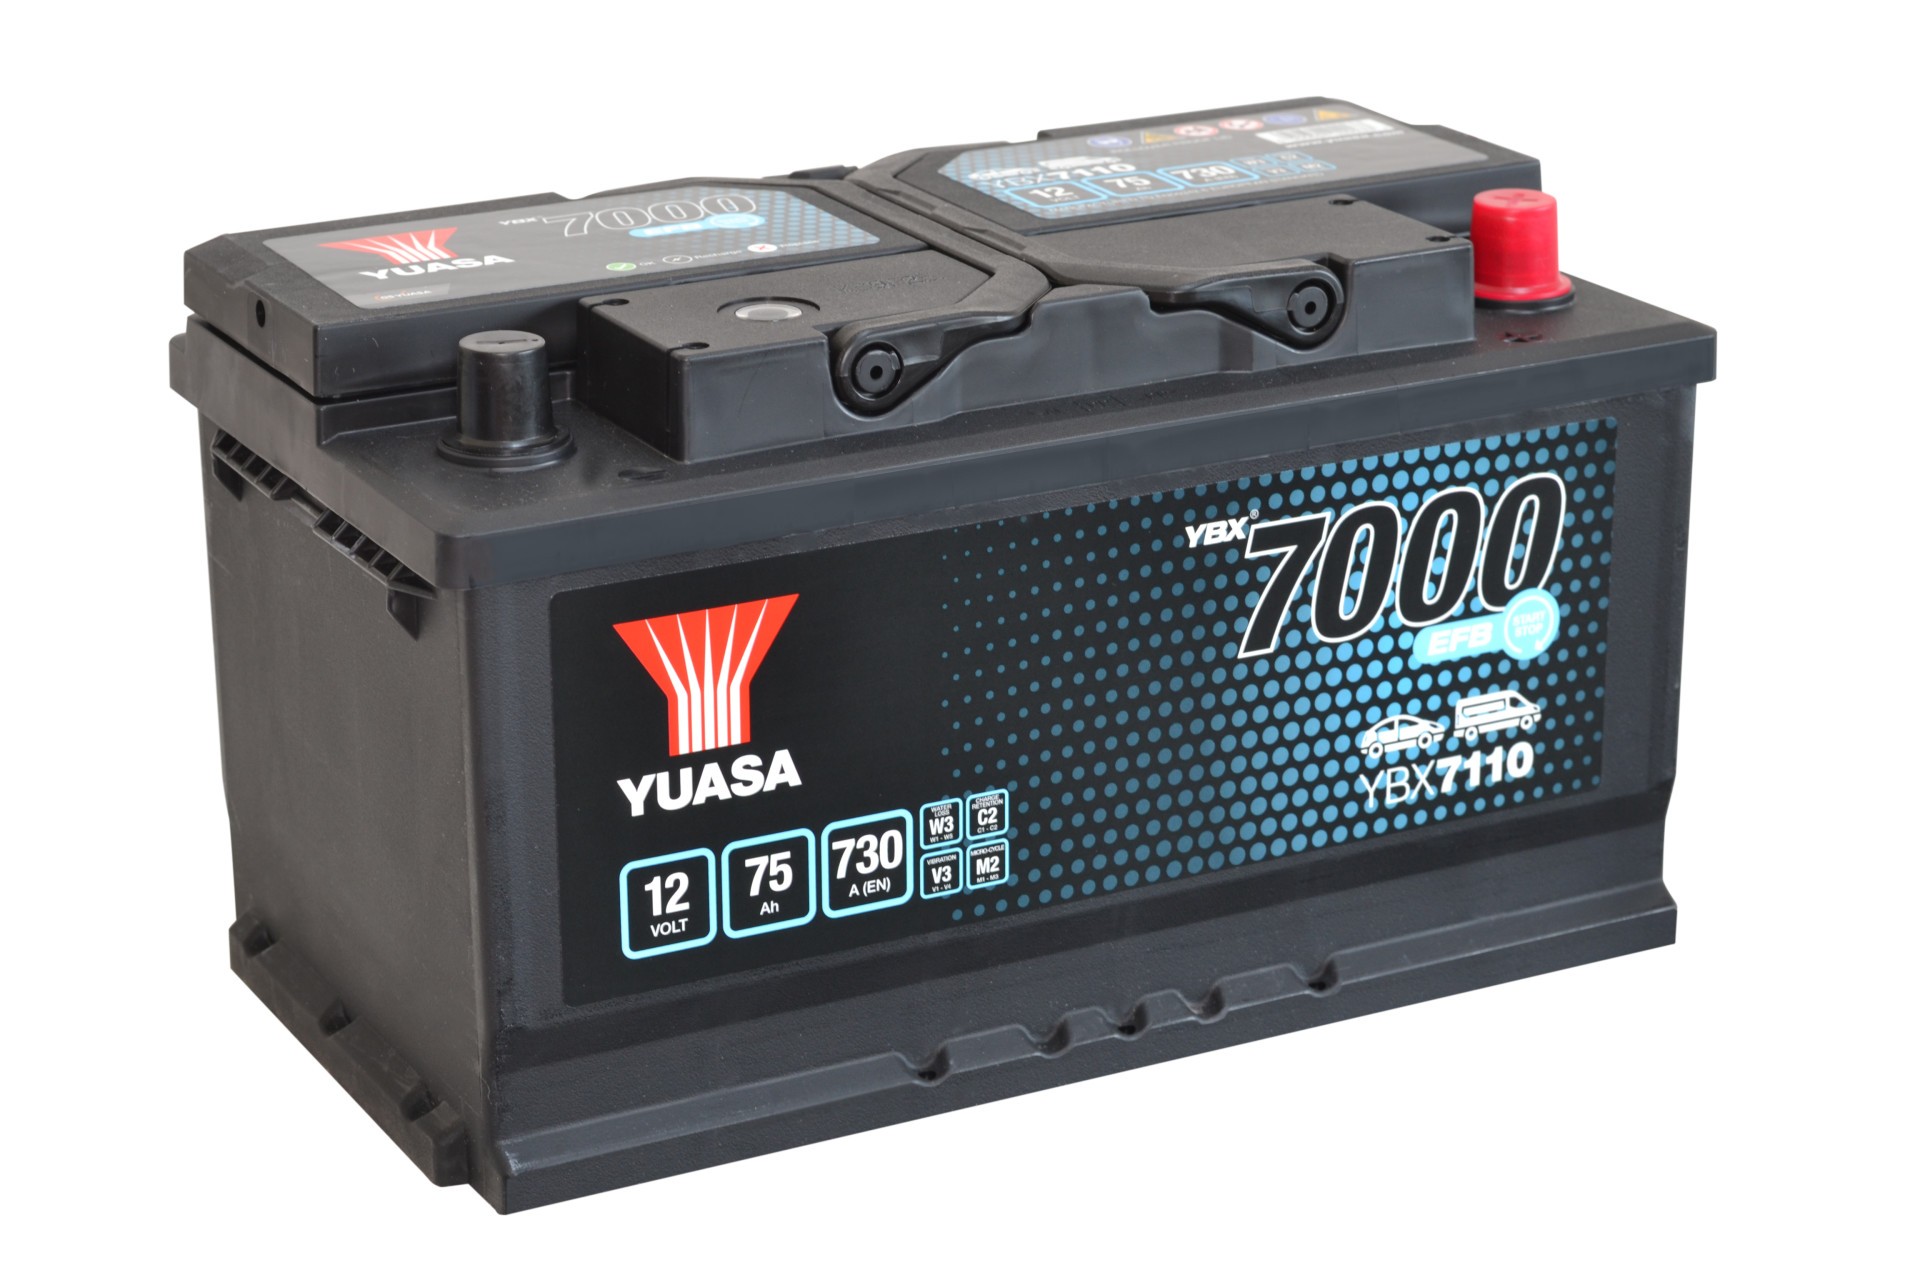 YUASA Autobatterie, Starterbatterie 12V 75Ah 730A 4.11L